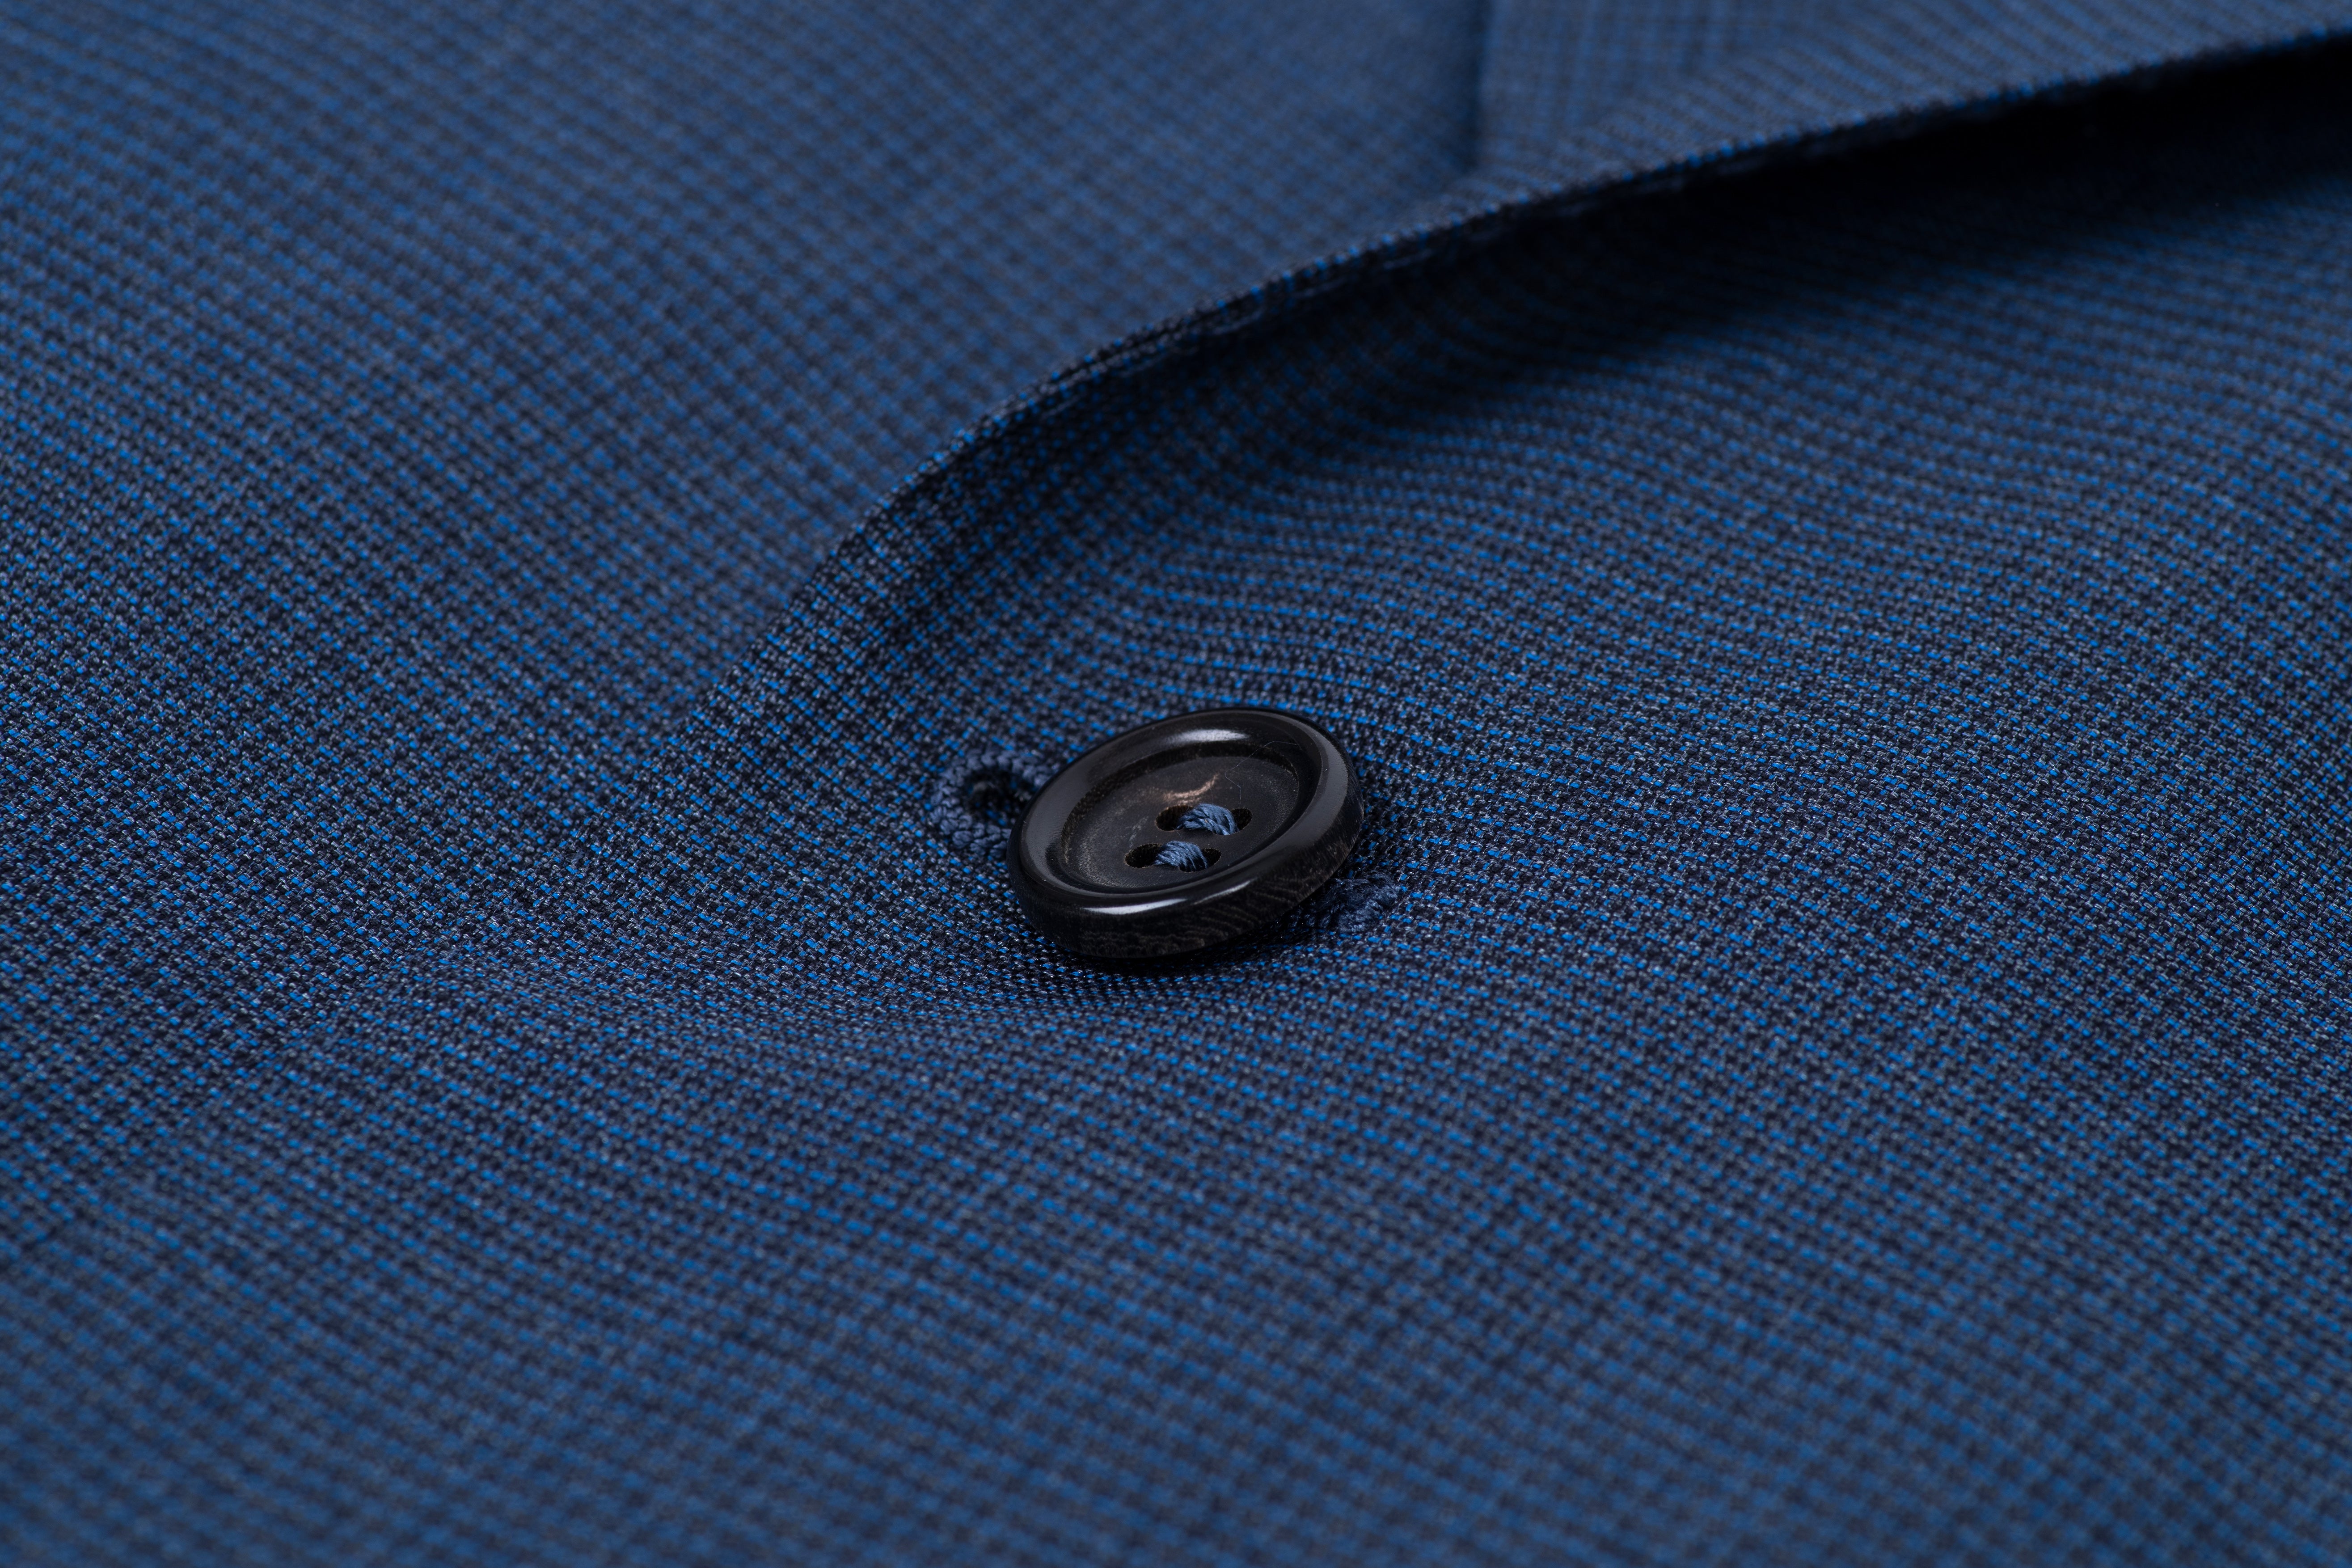 Canali Exclusive Silk & Wool Blue Blazer Jacket, SIZE US 42R, EU 52R